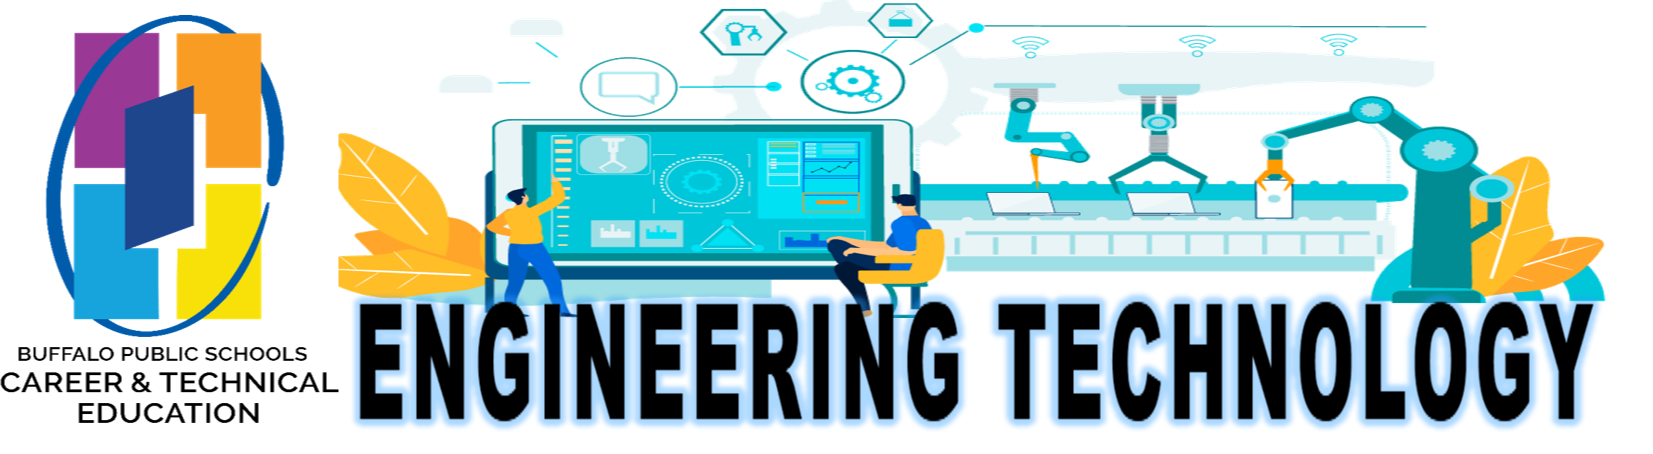 Engineering Tech Banner